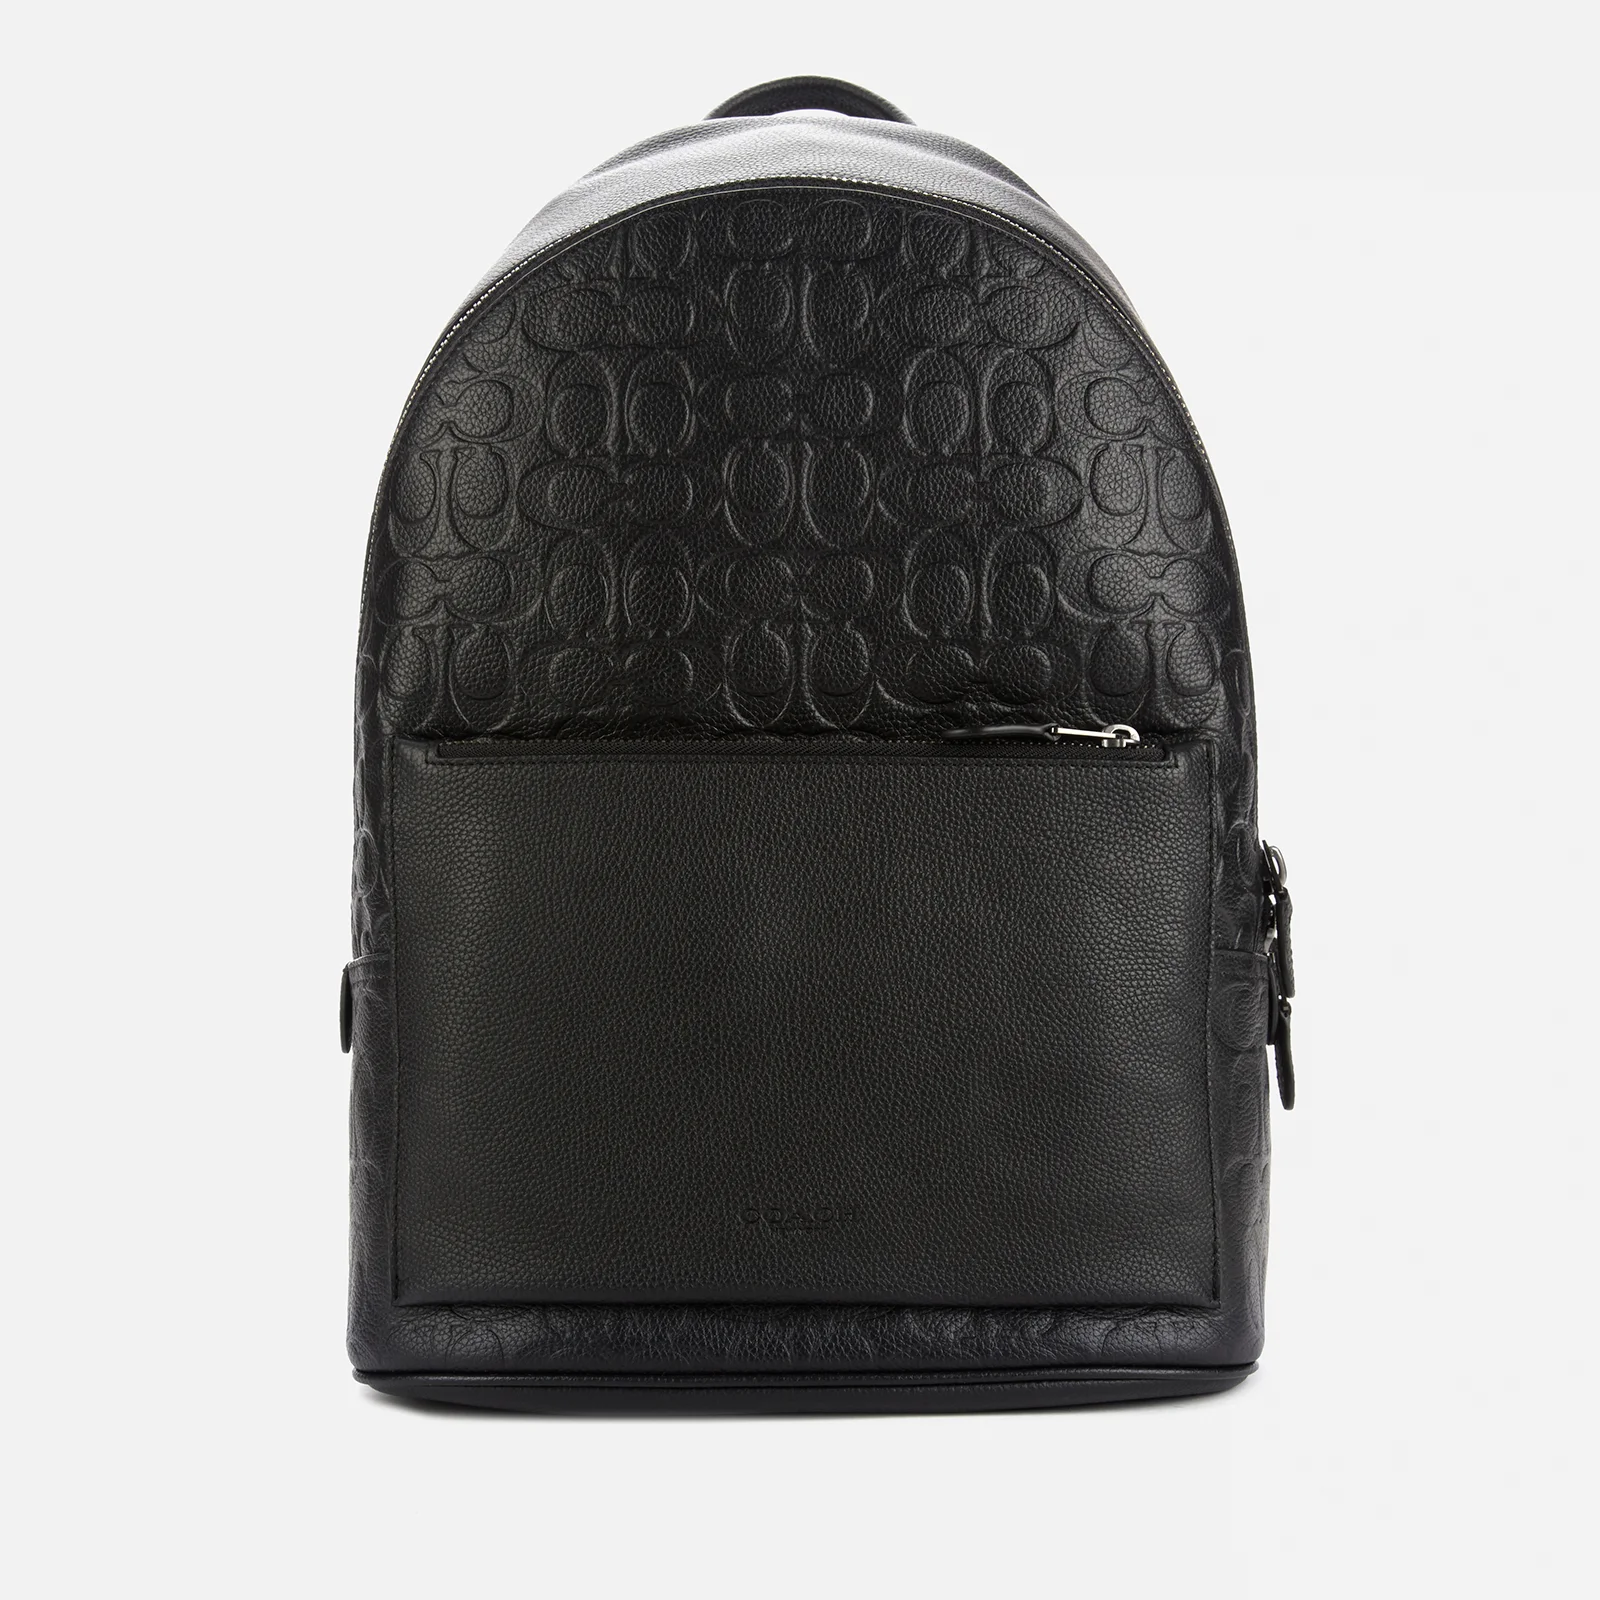 Coach Men's Metropolitan Soft Backpack in Signature Pebble Leather - Black Image 1